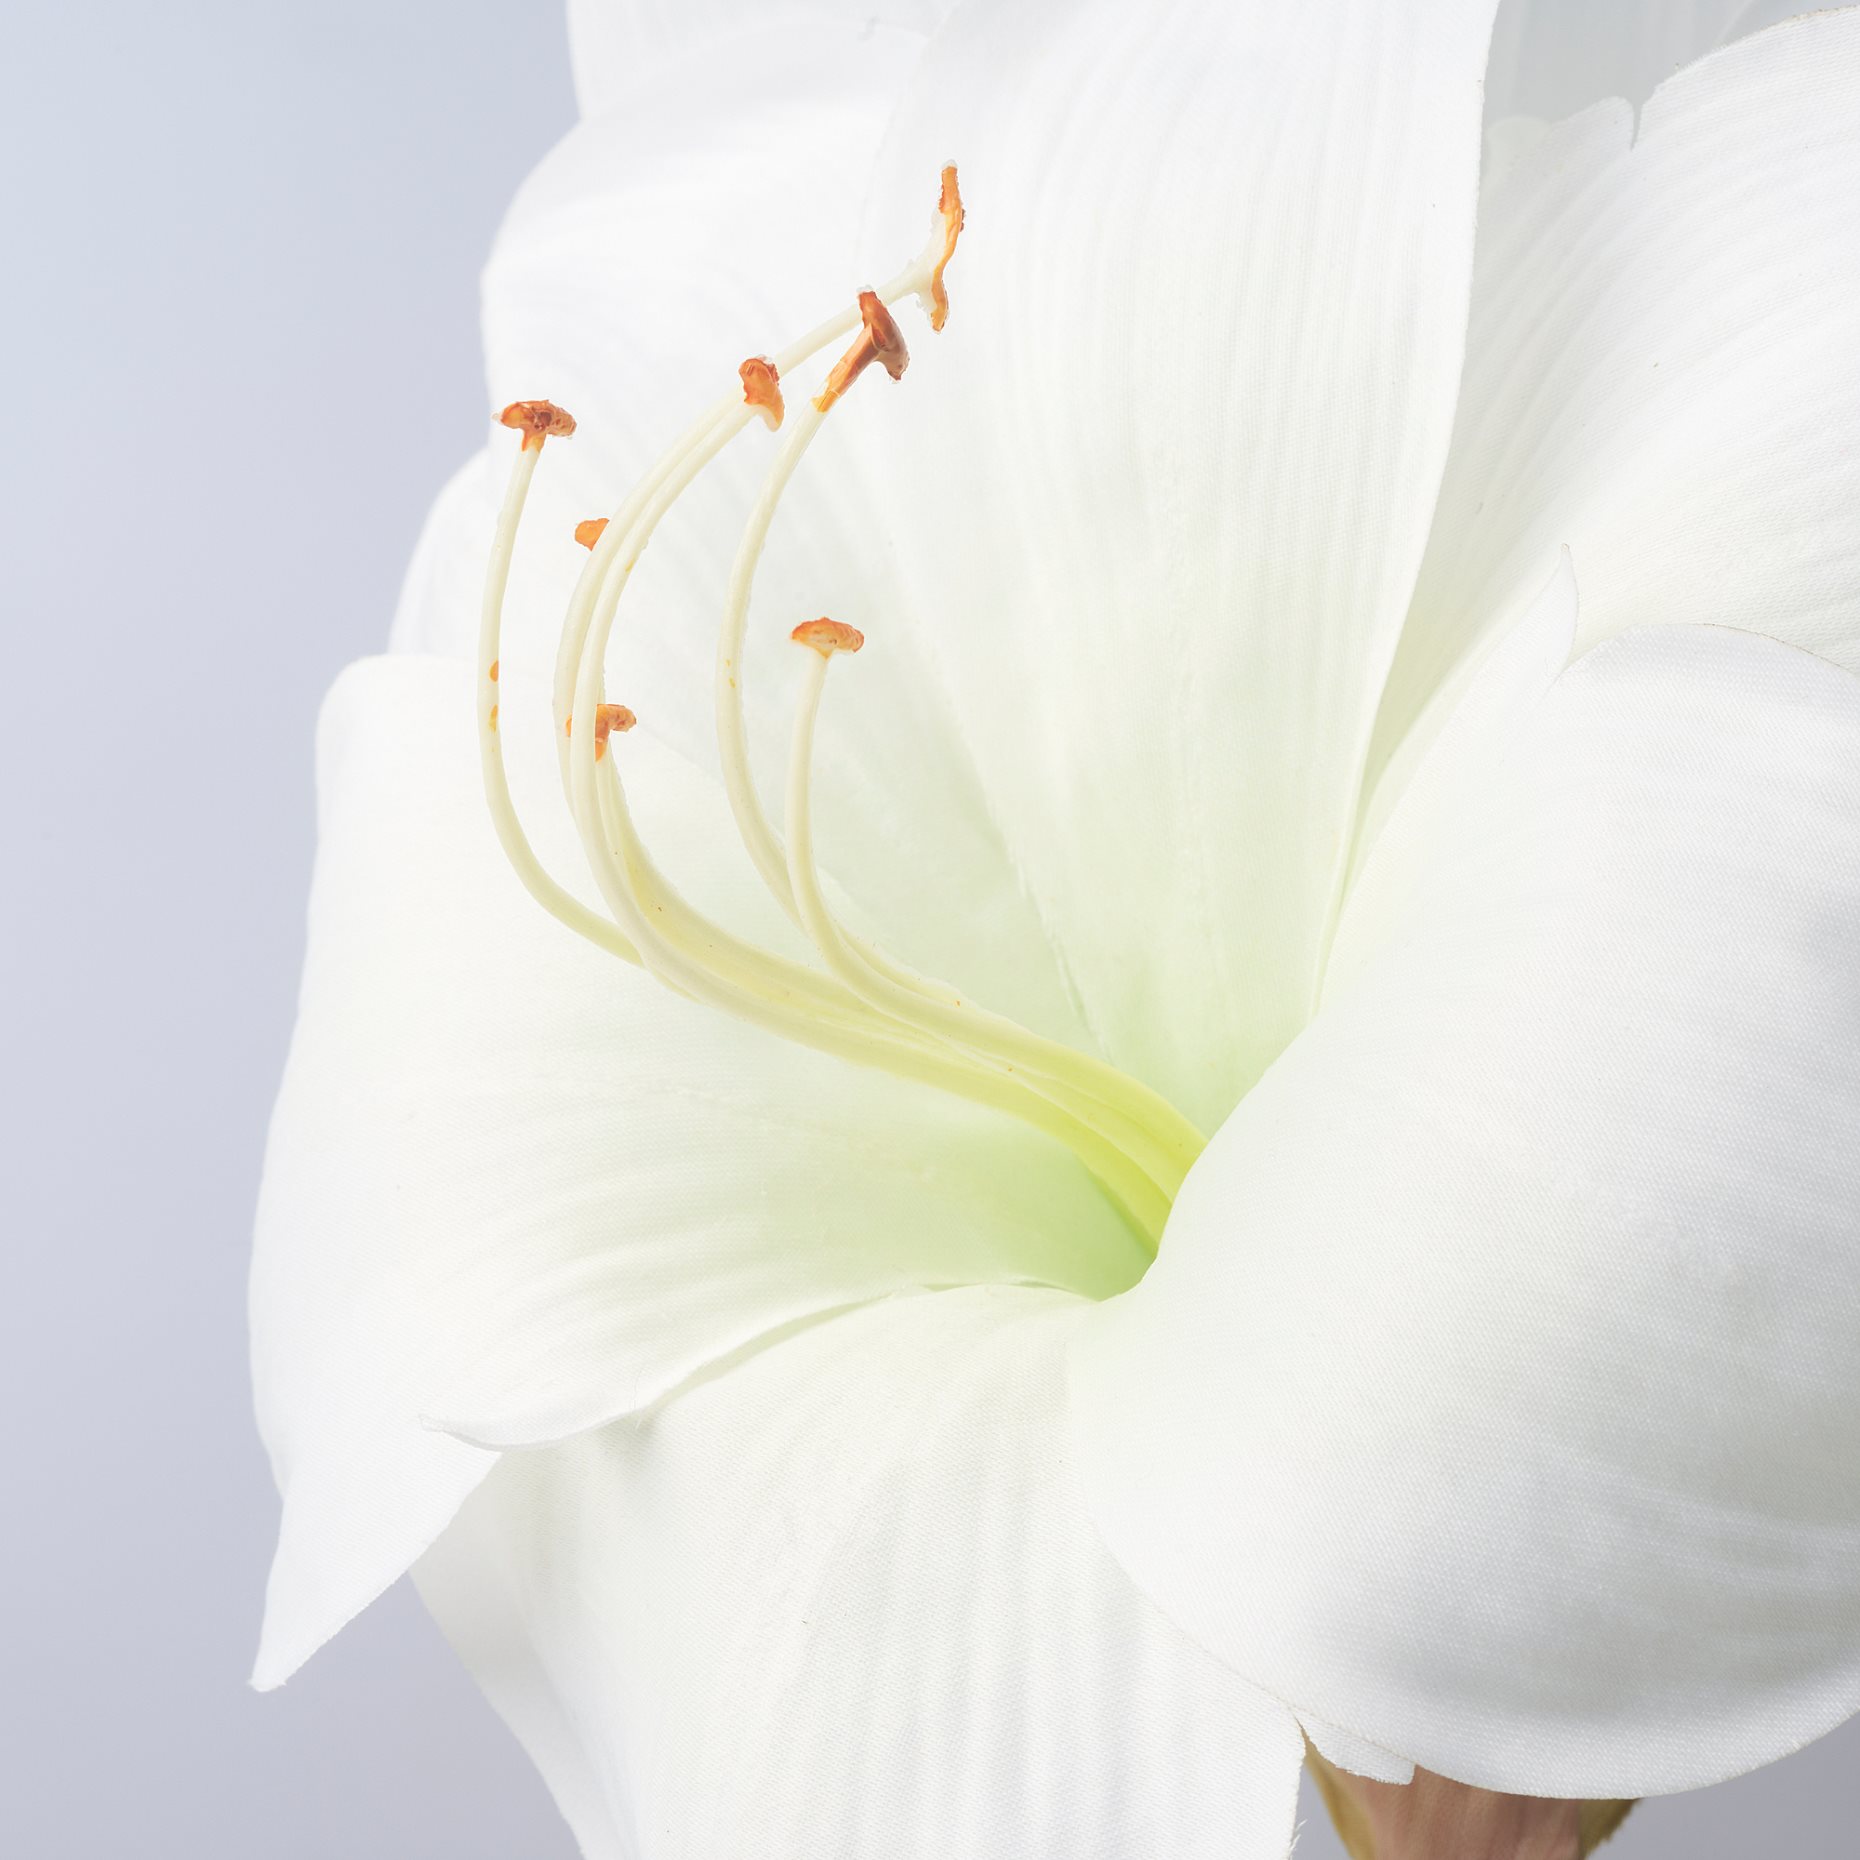 VINTERFINT, τεχνητό λουλούδι/εσωτερικού/εξωτερικού χώρου/Αμαρυλλίς, 60 cm, 505.621.54